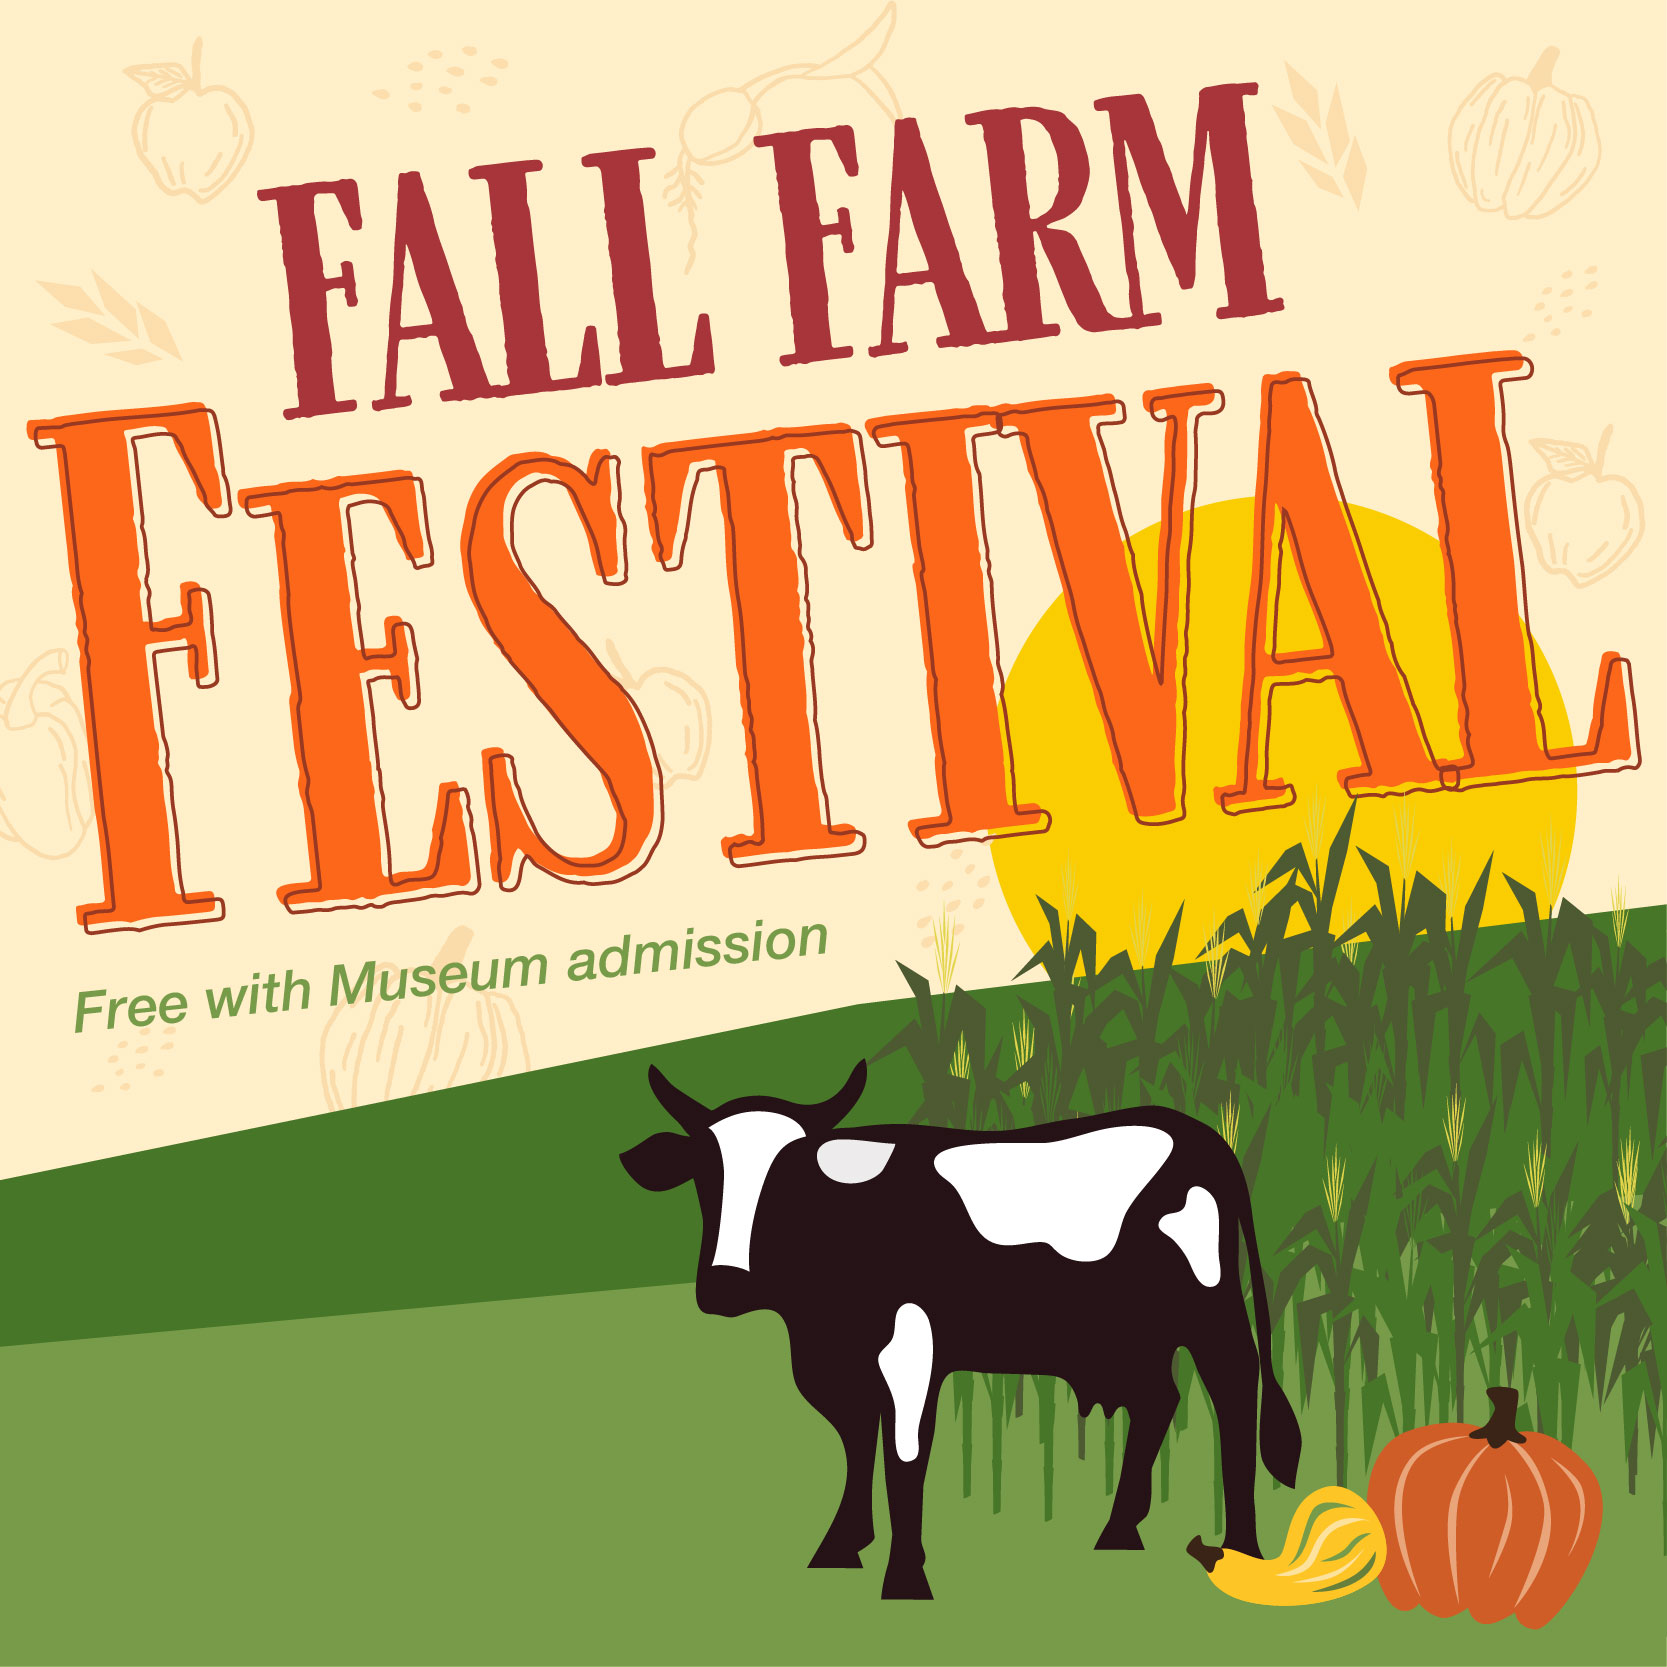 Fall Farm Festival